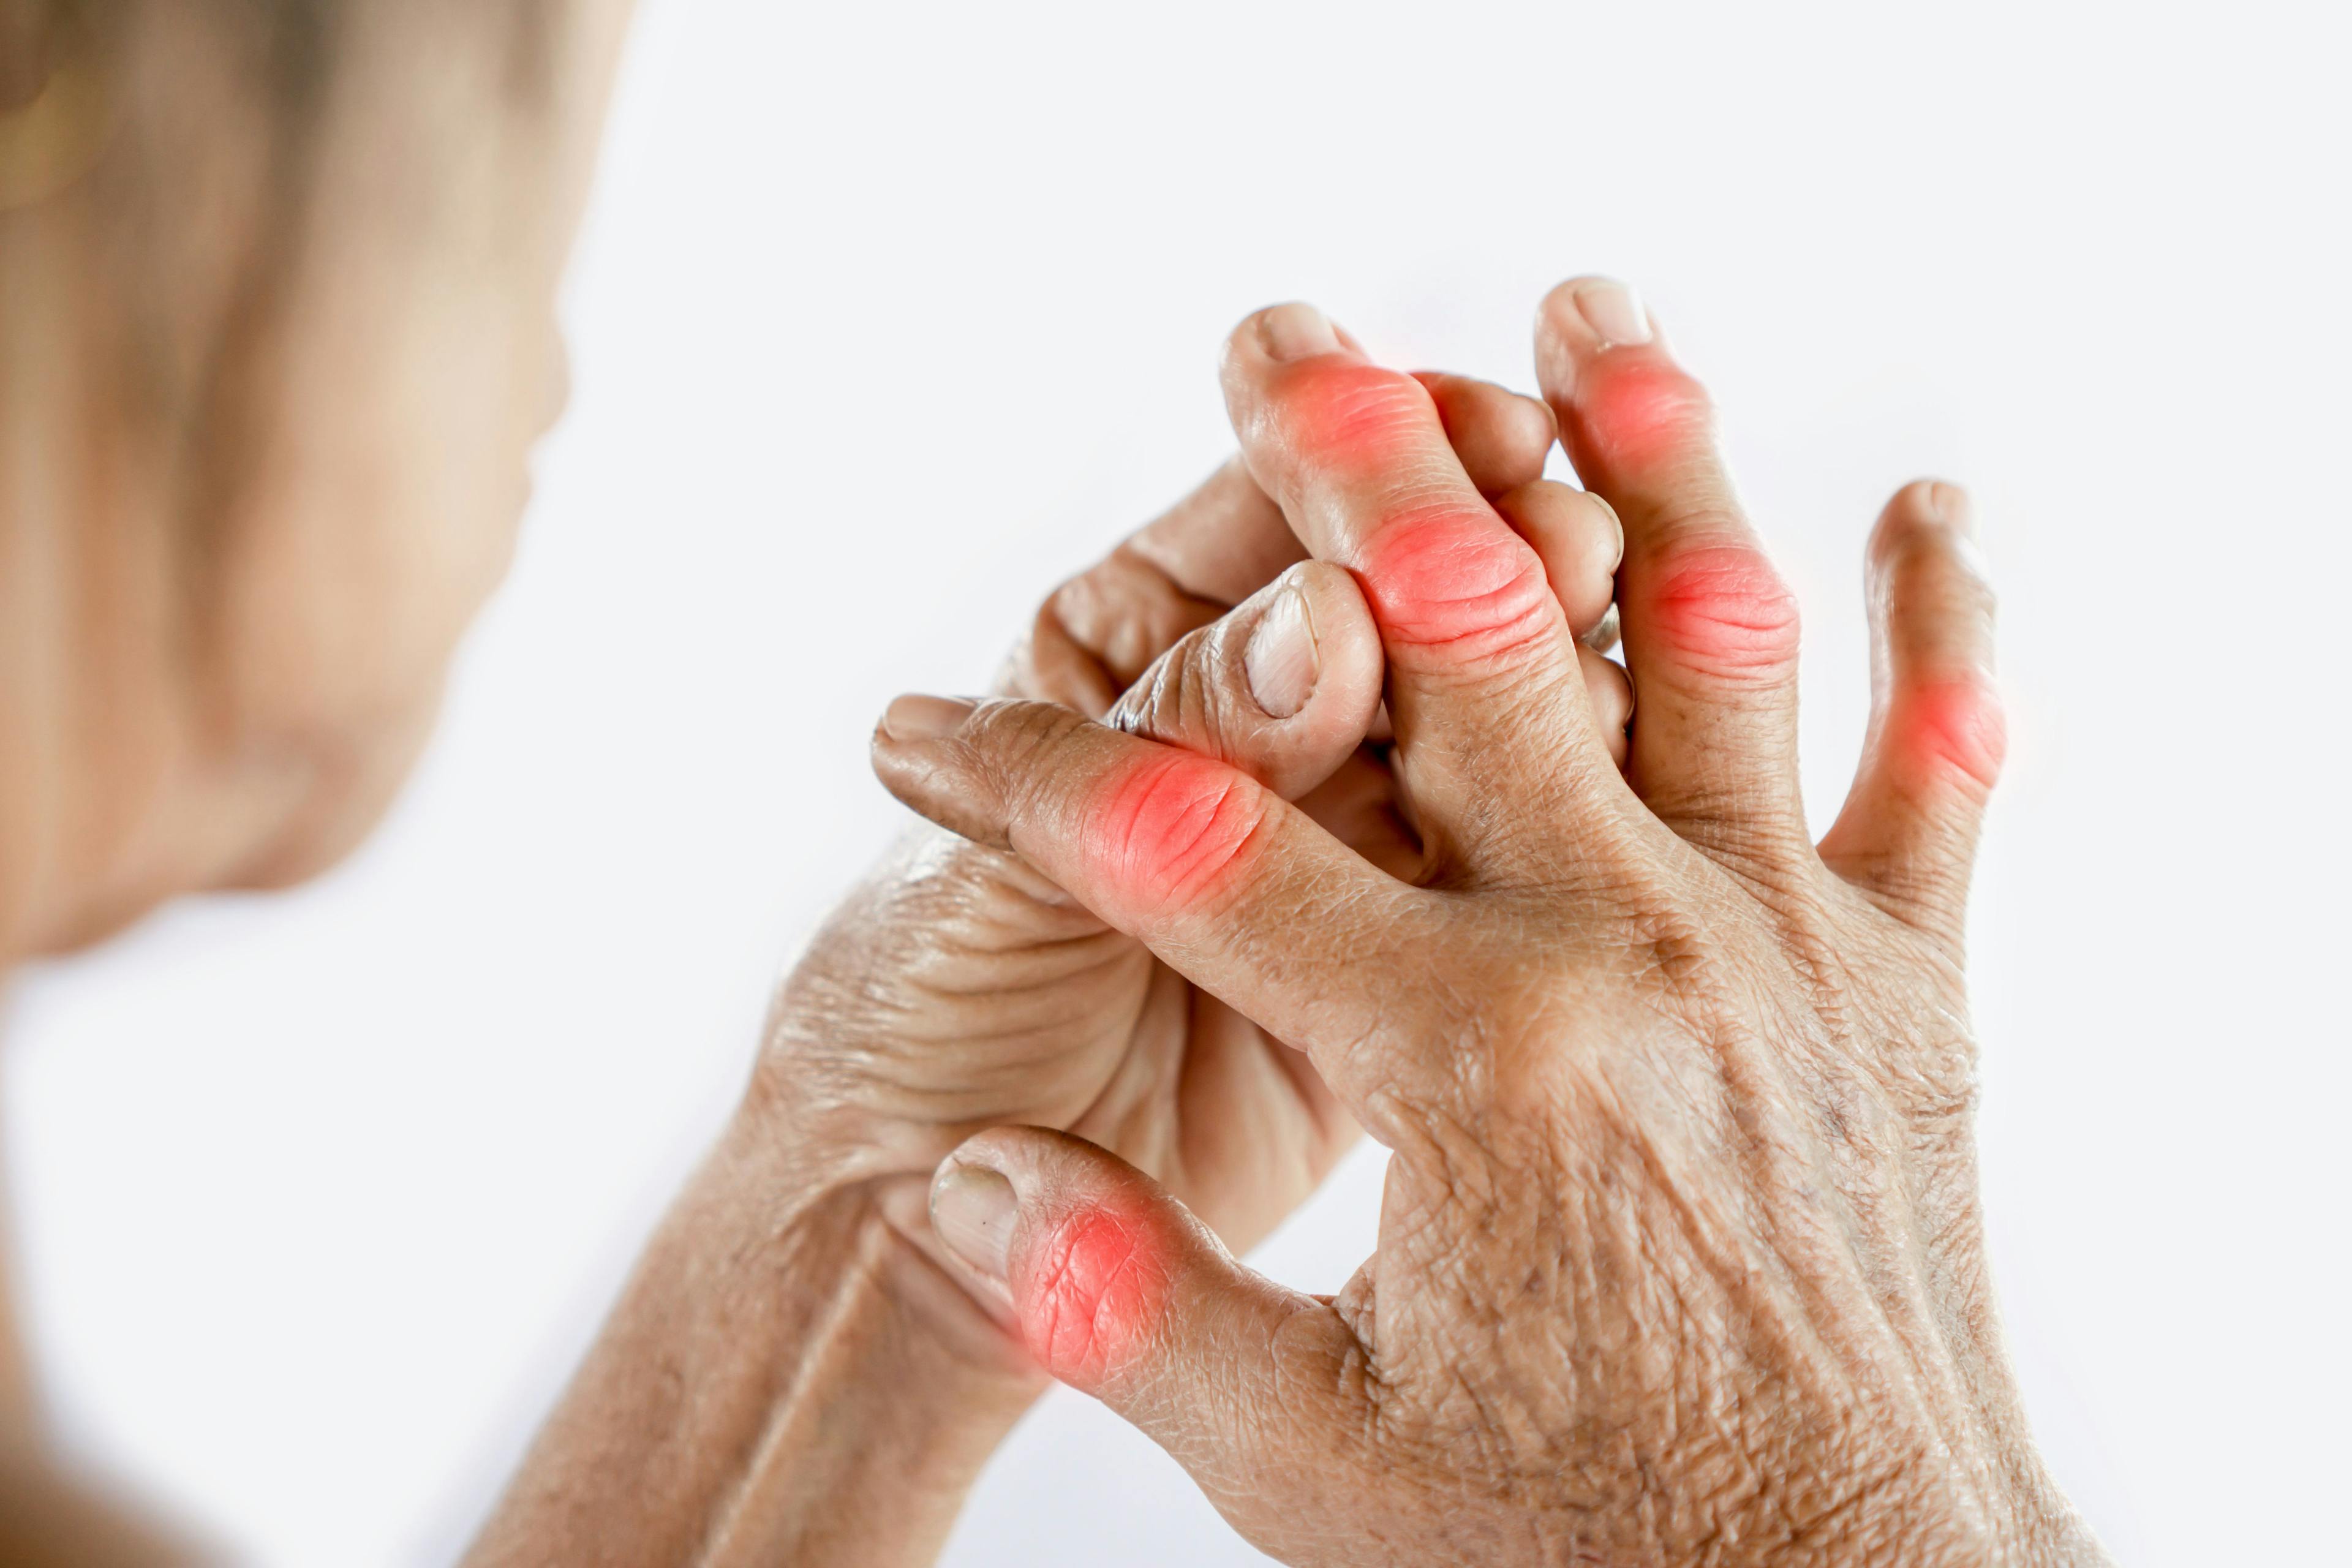 Hands of an older adult with arthritis | Image credit: doucefleur - stock.adobe.com